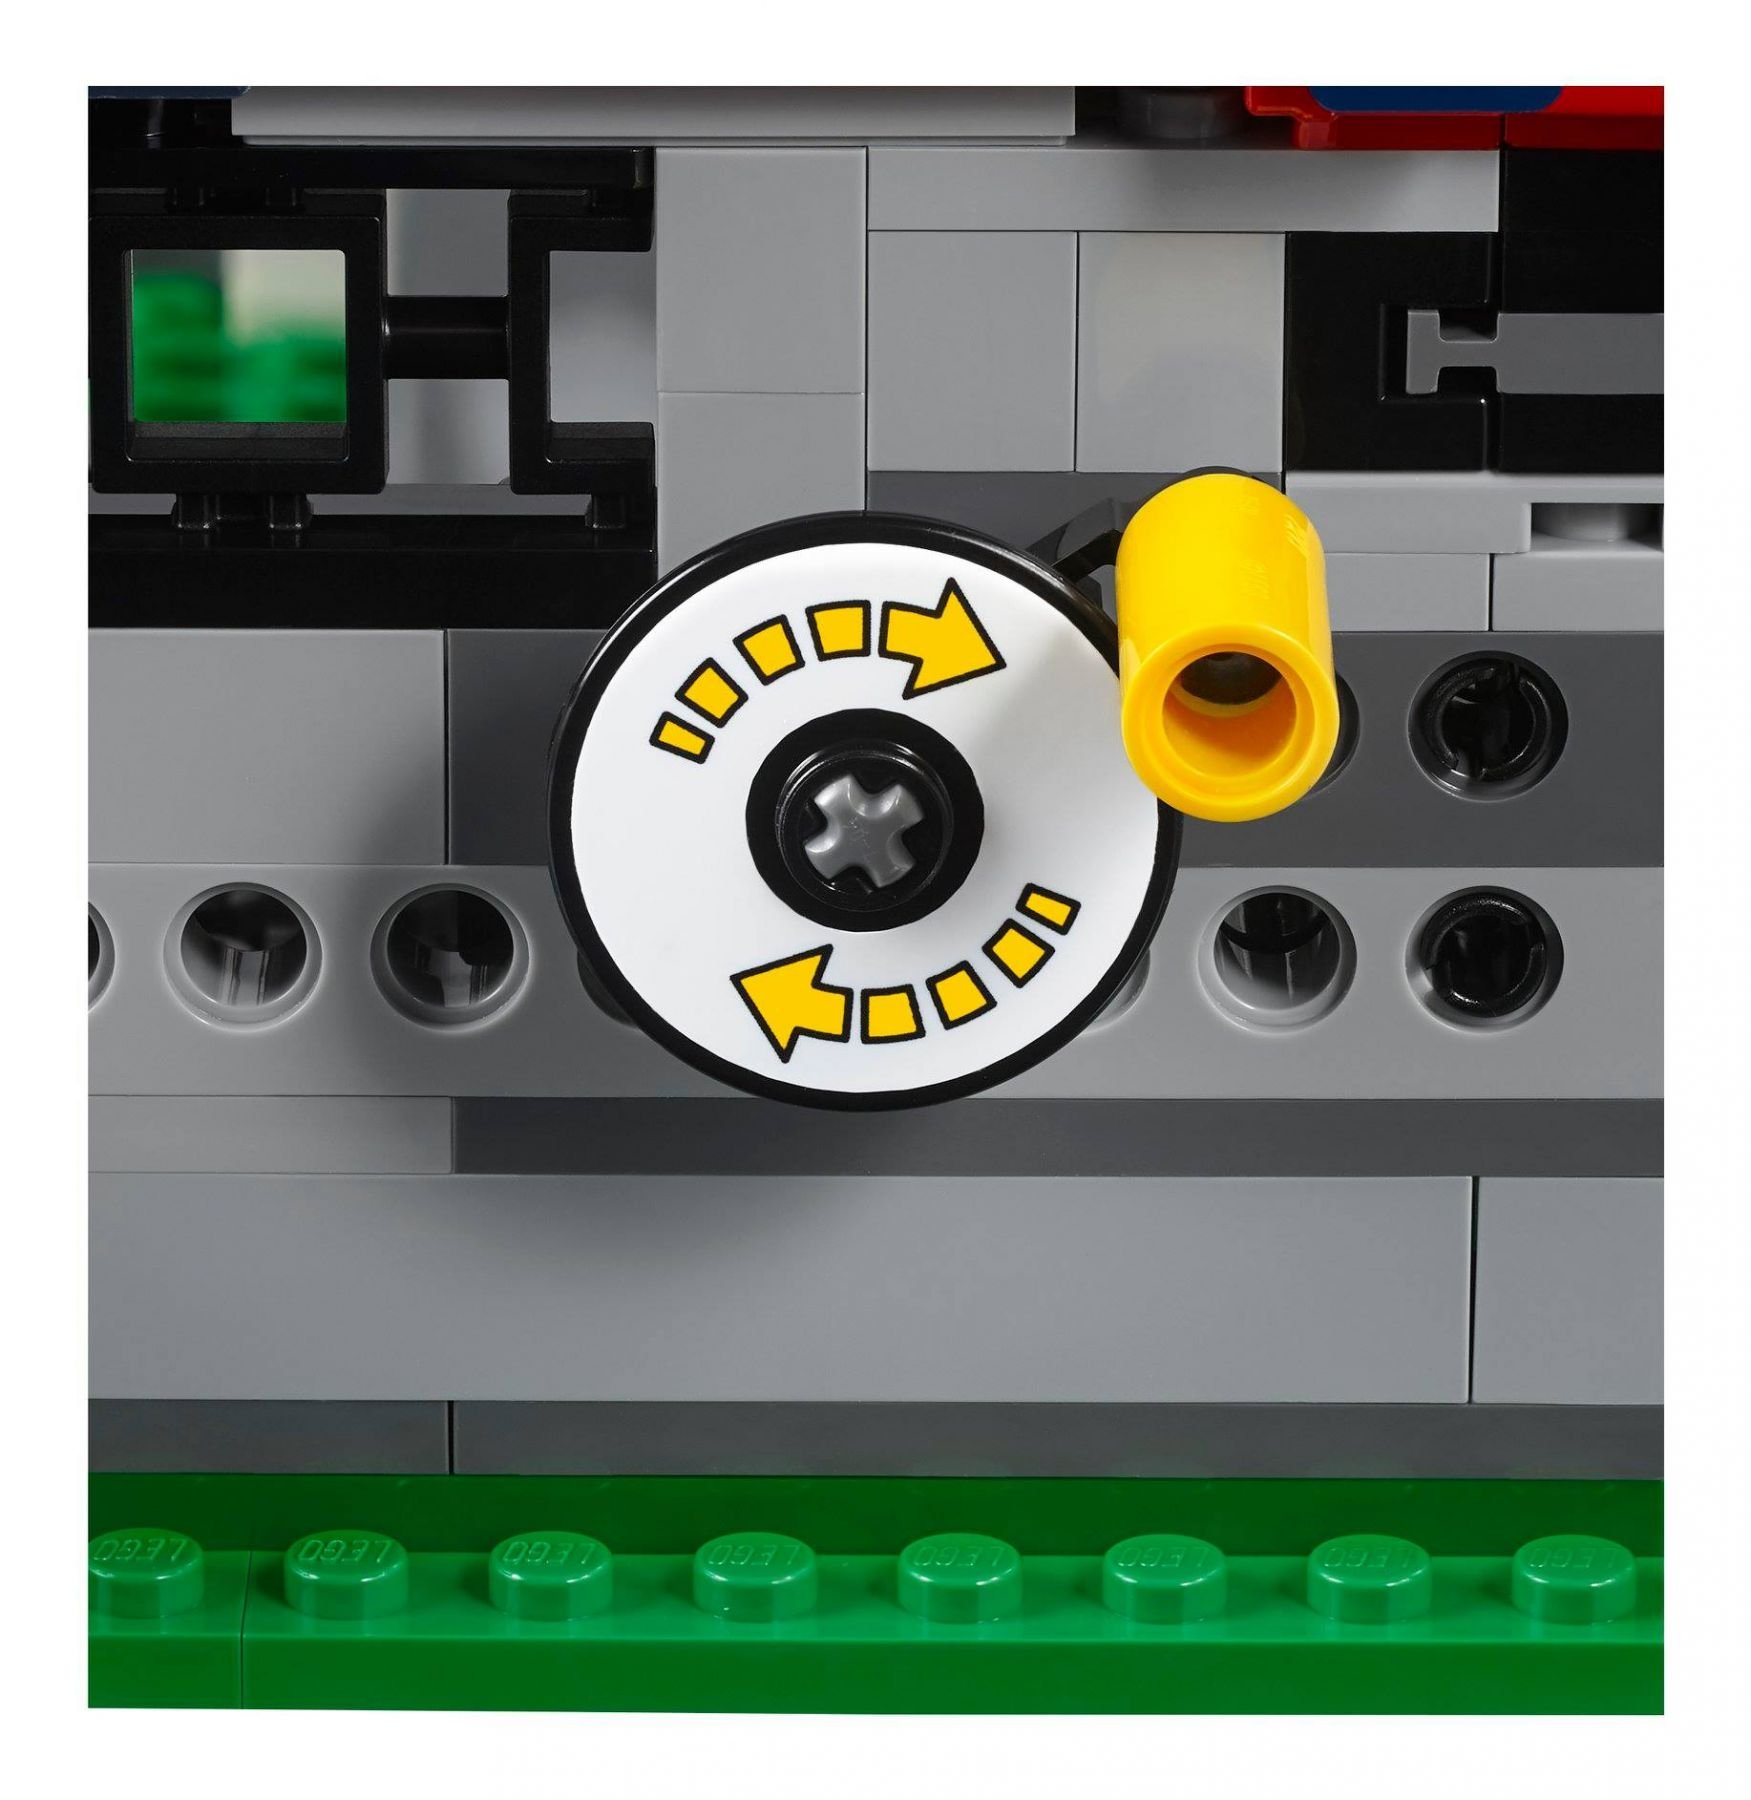 LEGO Advanced Models 10261 Achterbahn LEGO_Creator_Expert_10261_RollerCoaster_Achterbahn_img06.jpg